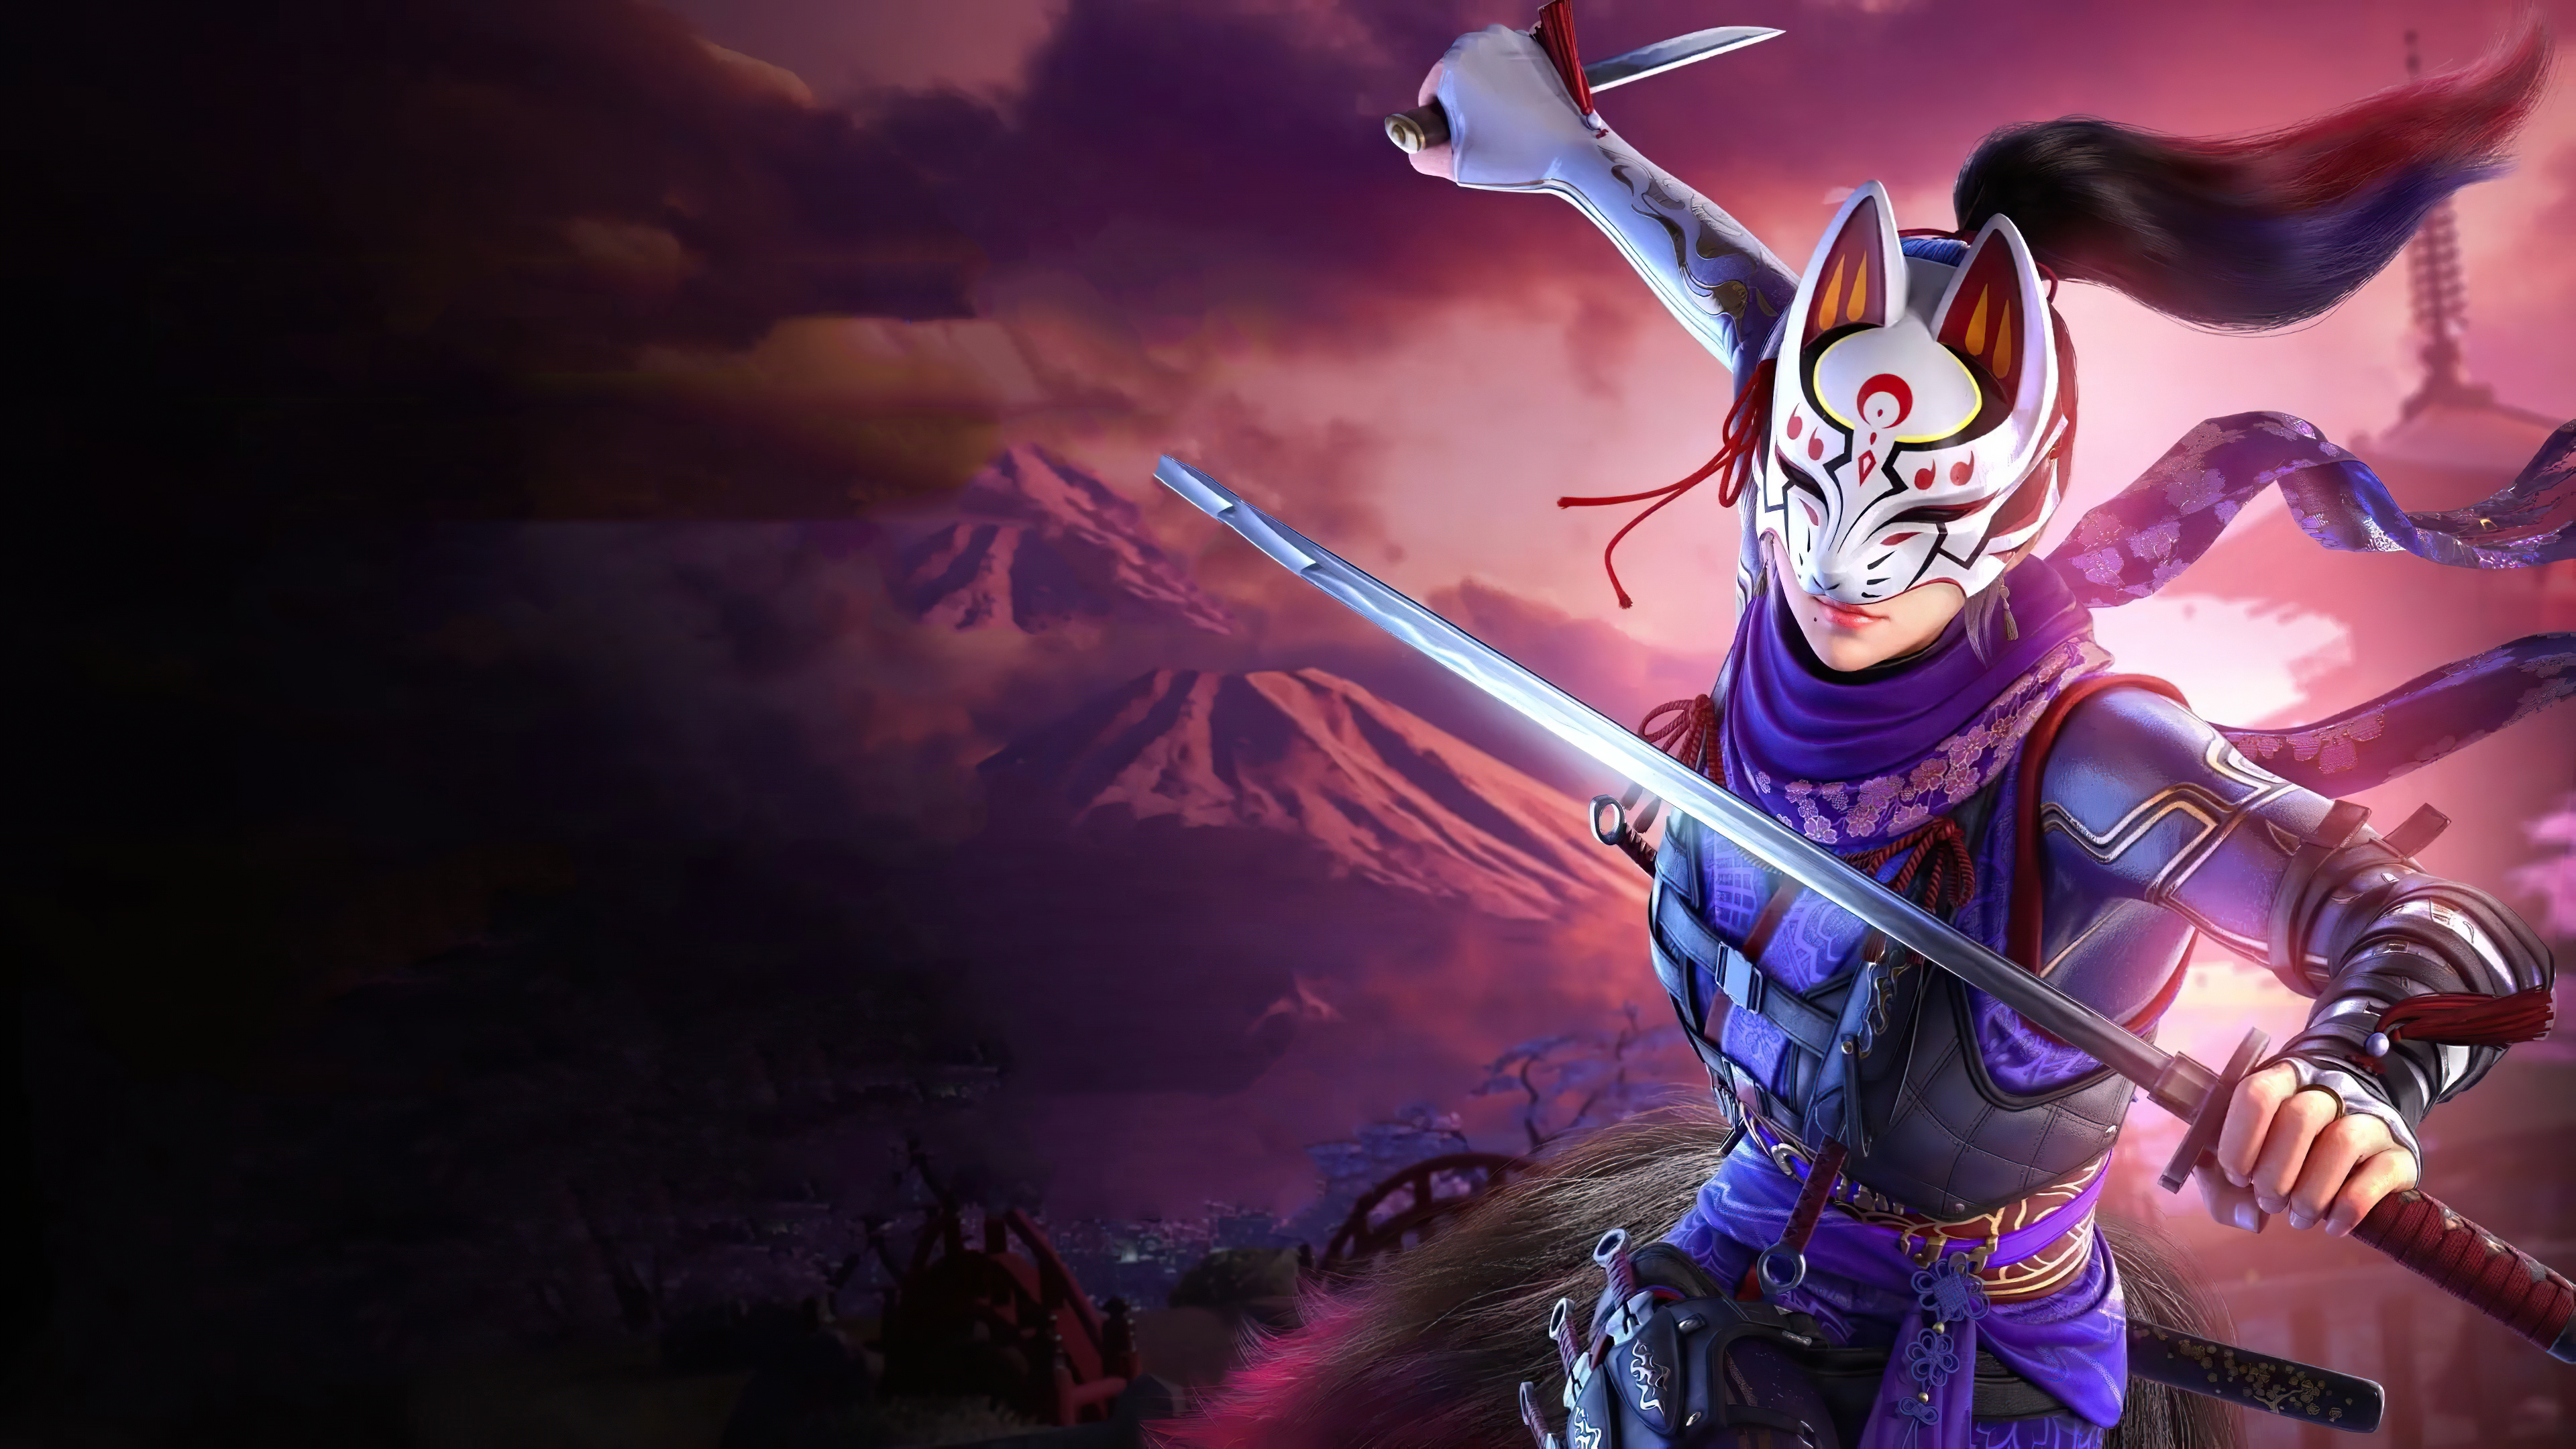 Kunimitsu Tekken HD Games, 4k Wallpaper, Image, Background, Photo and Picture